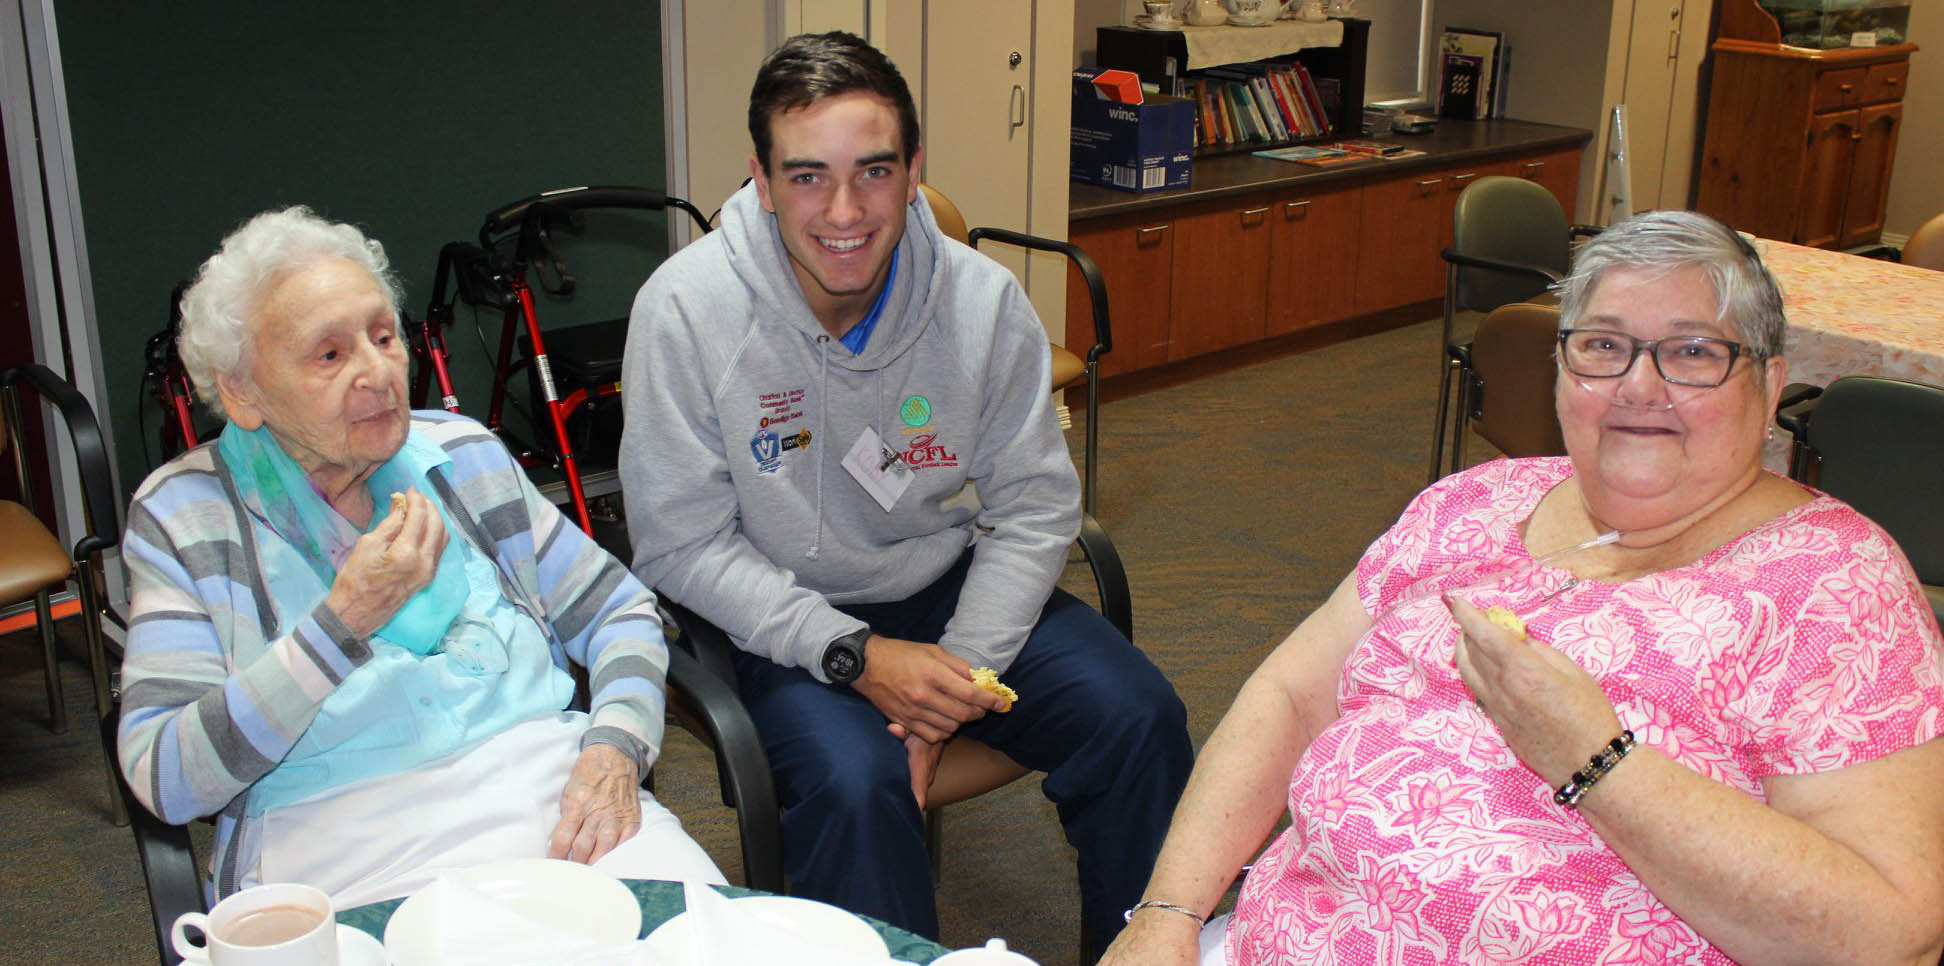 Youth leadership program participant talking to elders at nursing home.